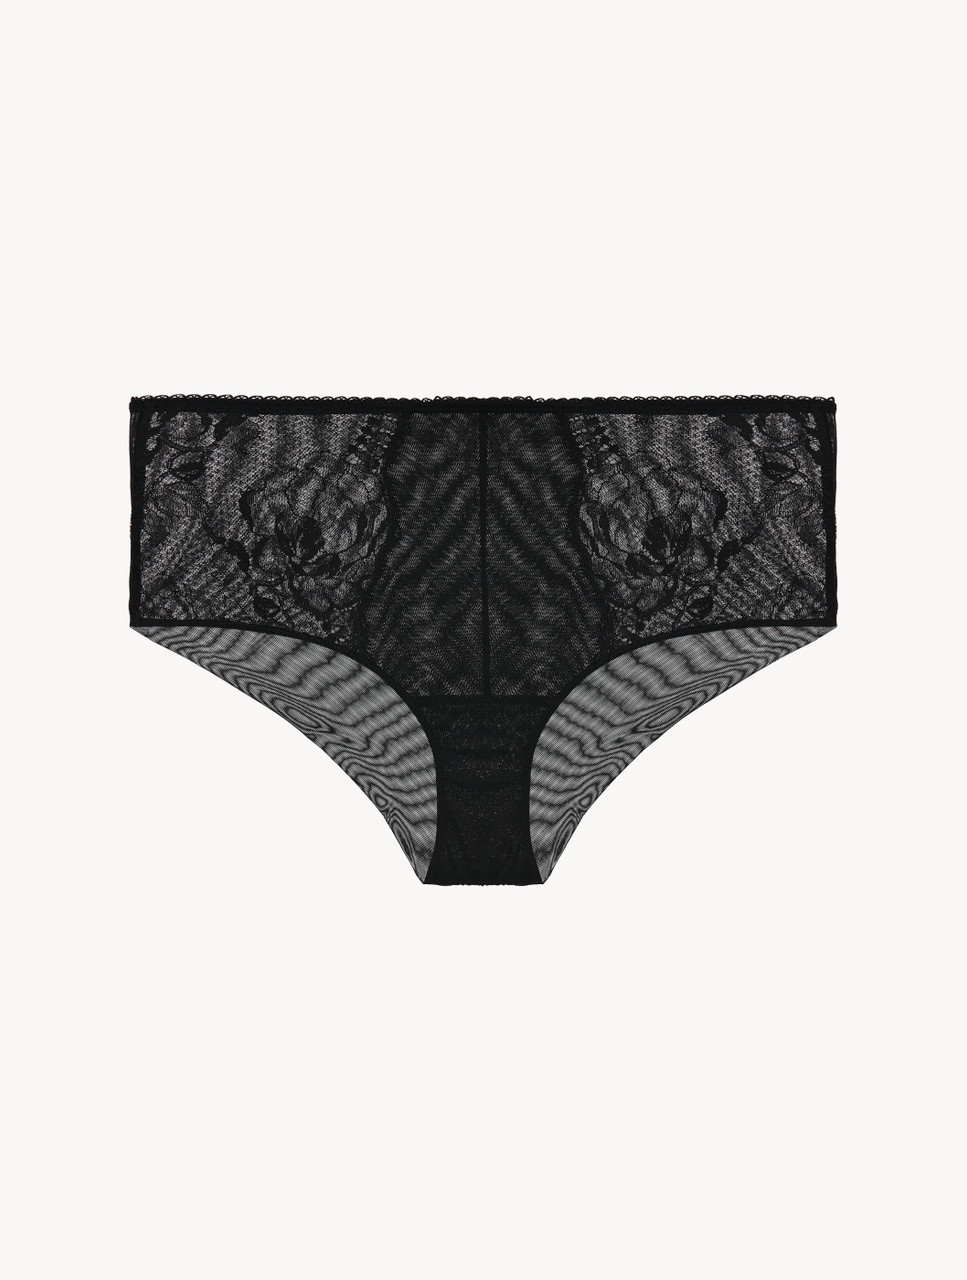 La Perla Women Panty Brief Designer Underwear Lingerie Black Lace